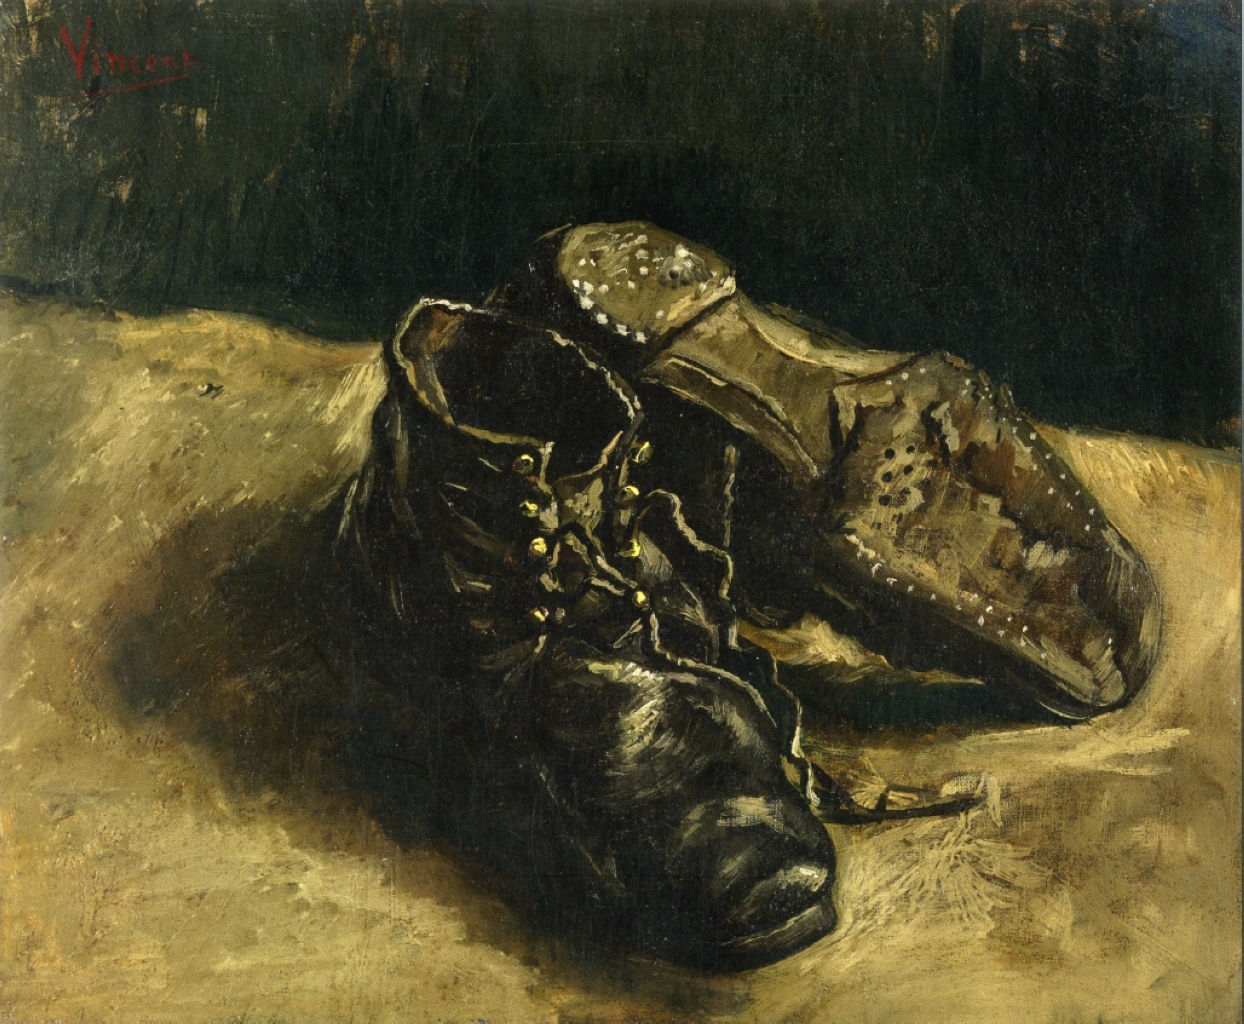 Vincent van Gogh - A Pair of Shoes 1886